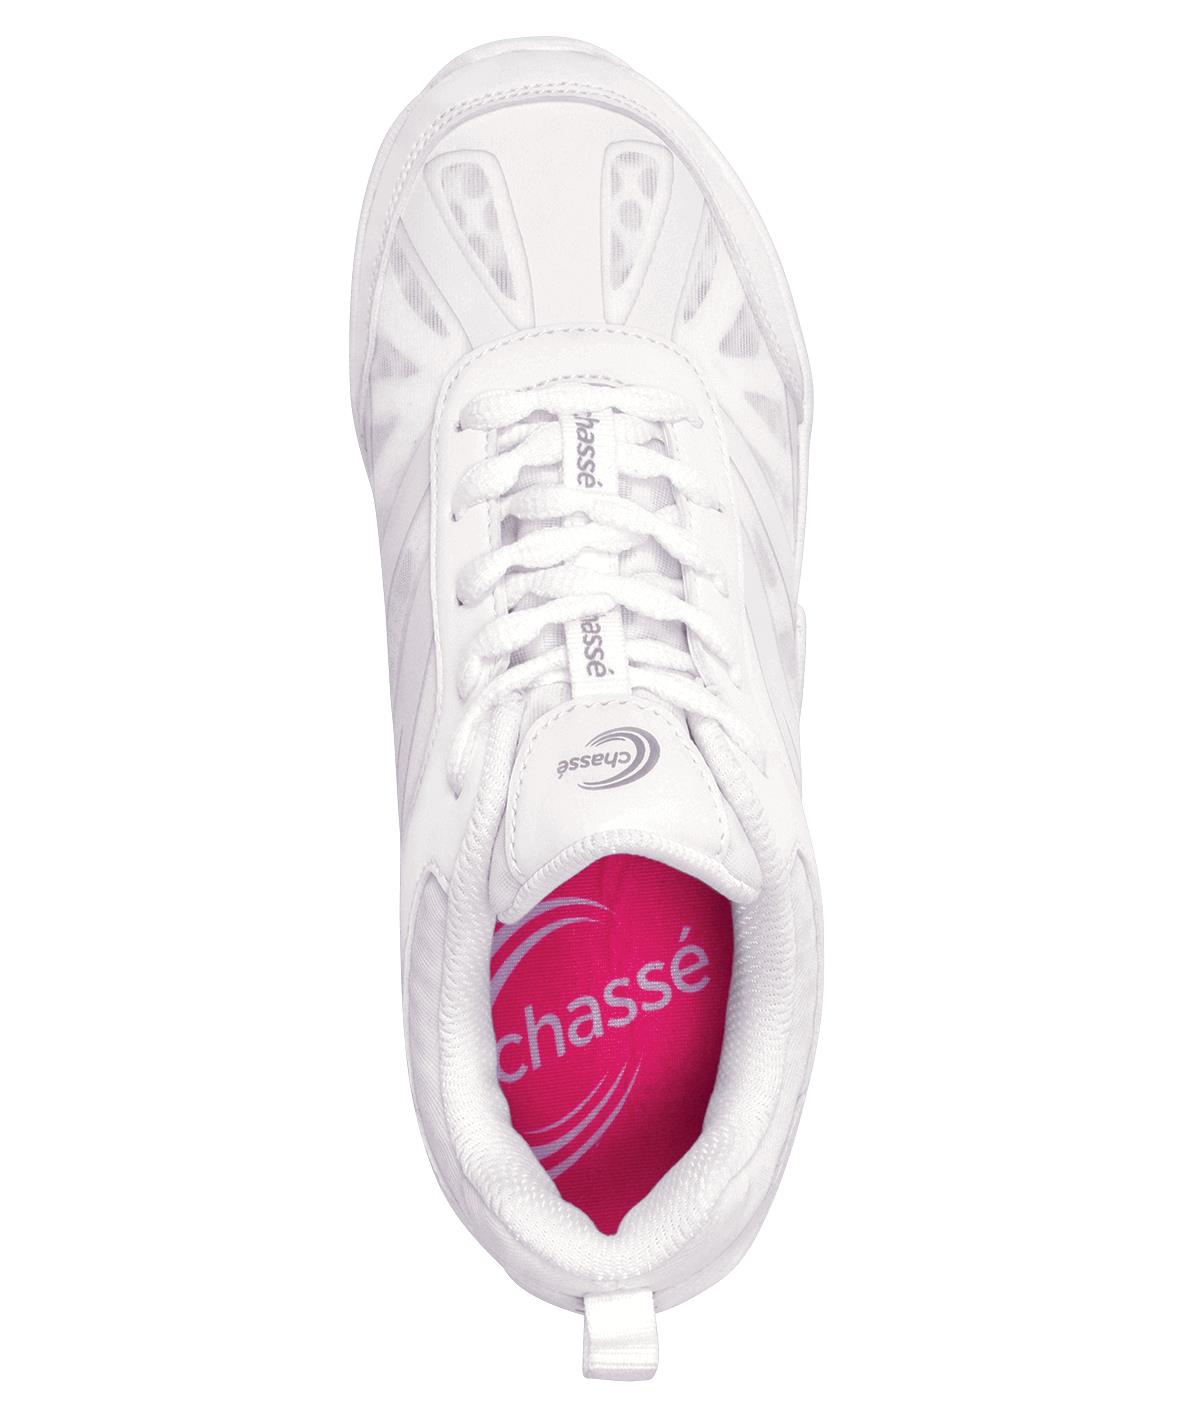 Chasse Platinum Shoe